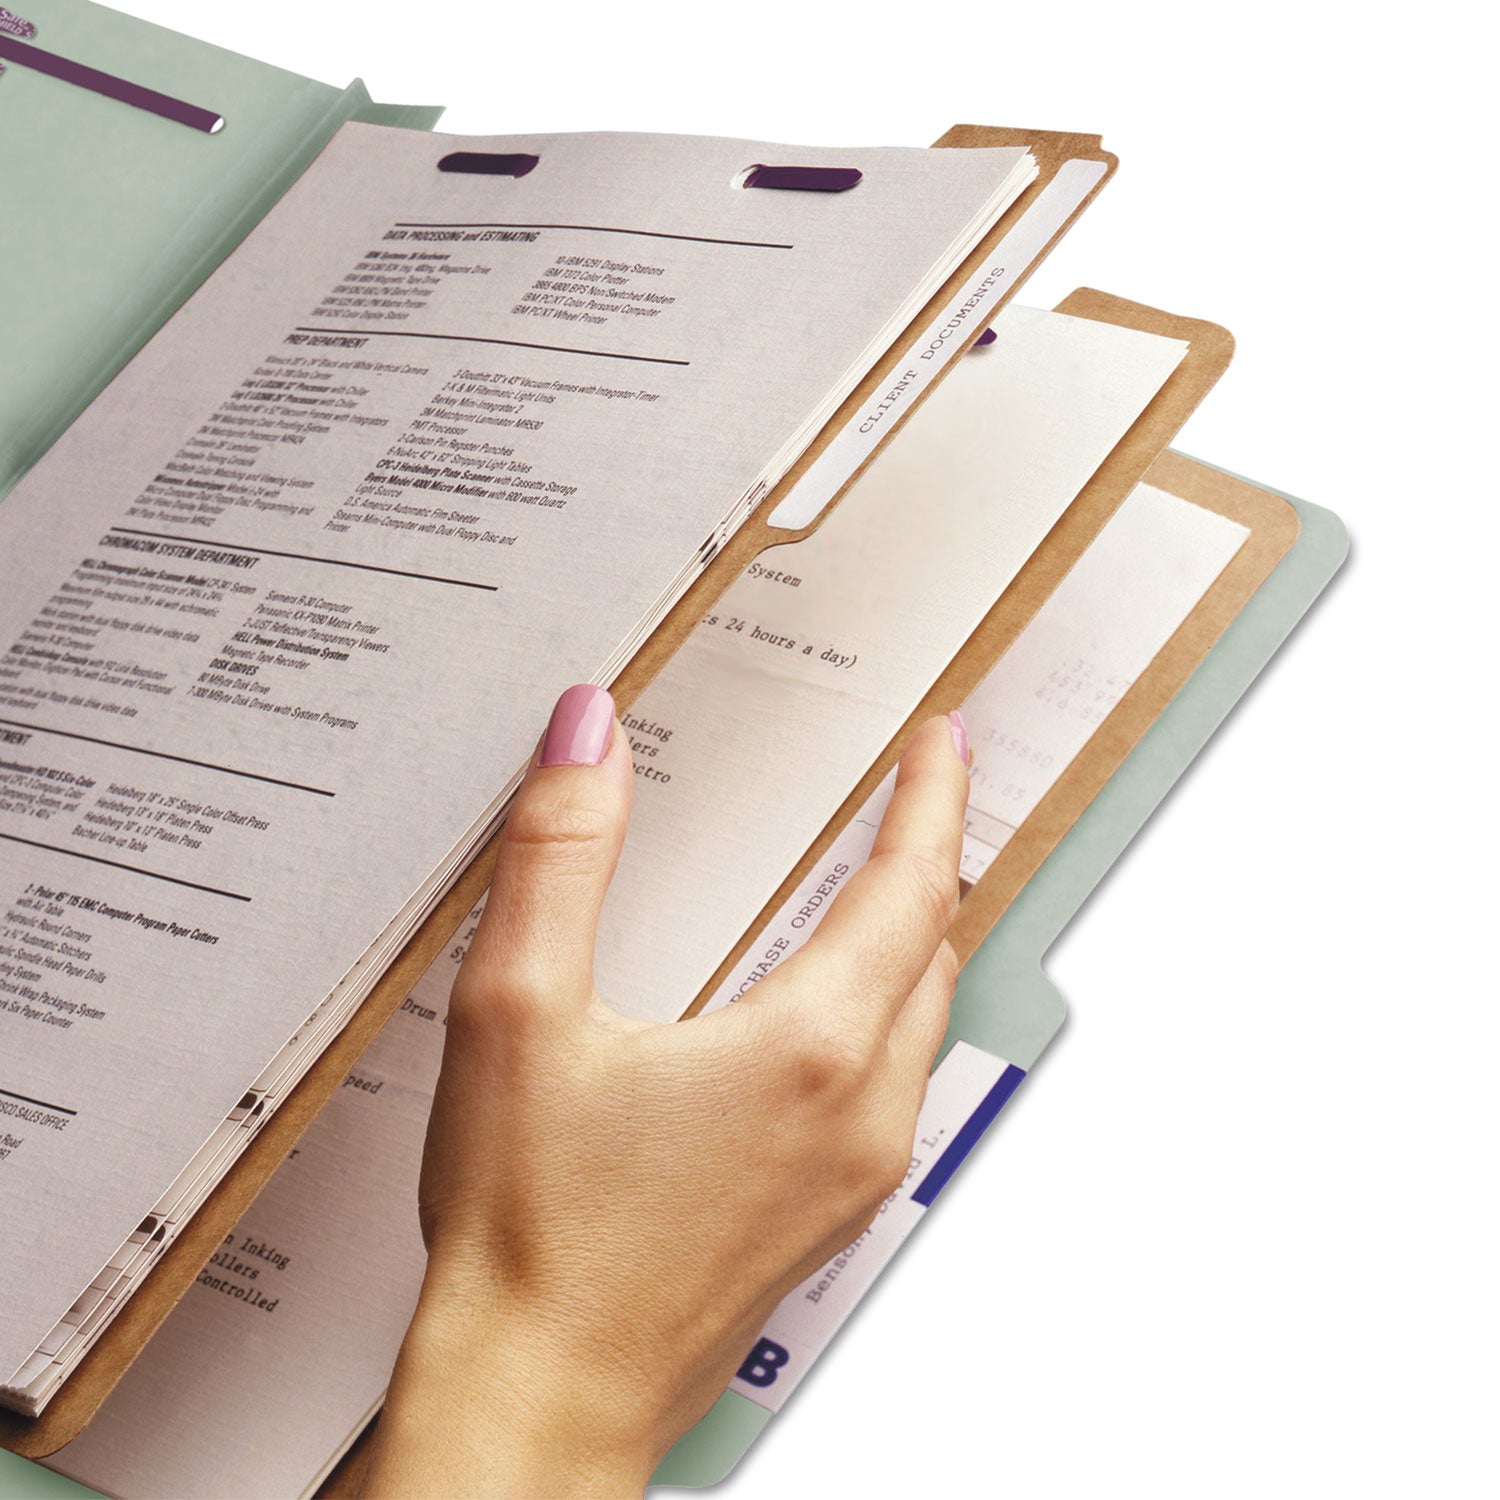 Pressboard Classification Folders, Eight SafeSHIELD Fasteners, 2/5-Cut Tabs, 3 Dividers, Letter Size, Gray-Green, 10/Box - 